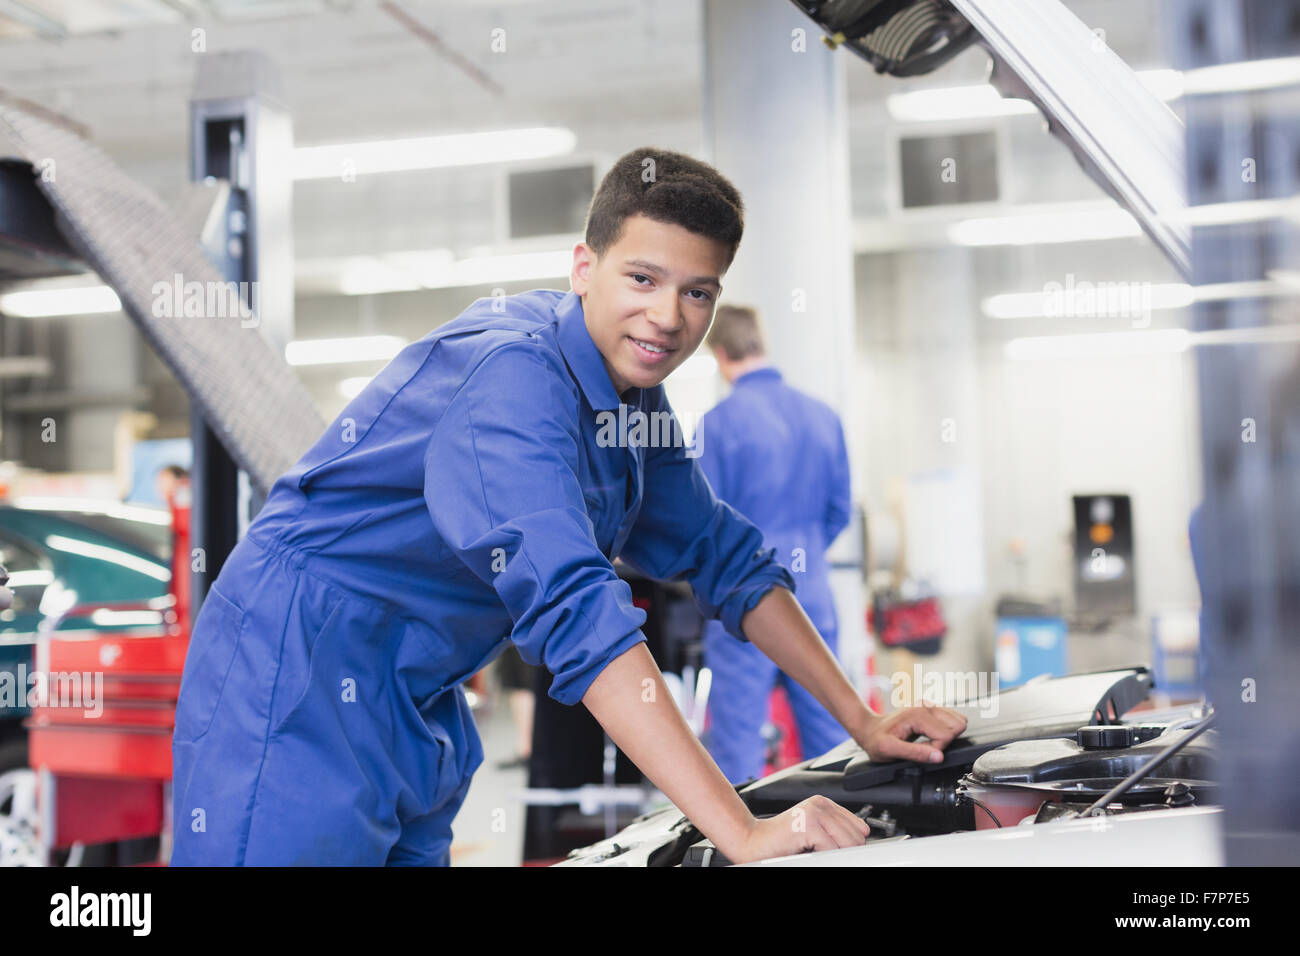 Portrait confident mechanic leaning over car engine in auto repair shop Stock Photo